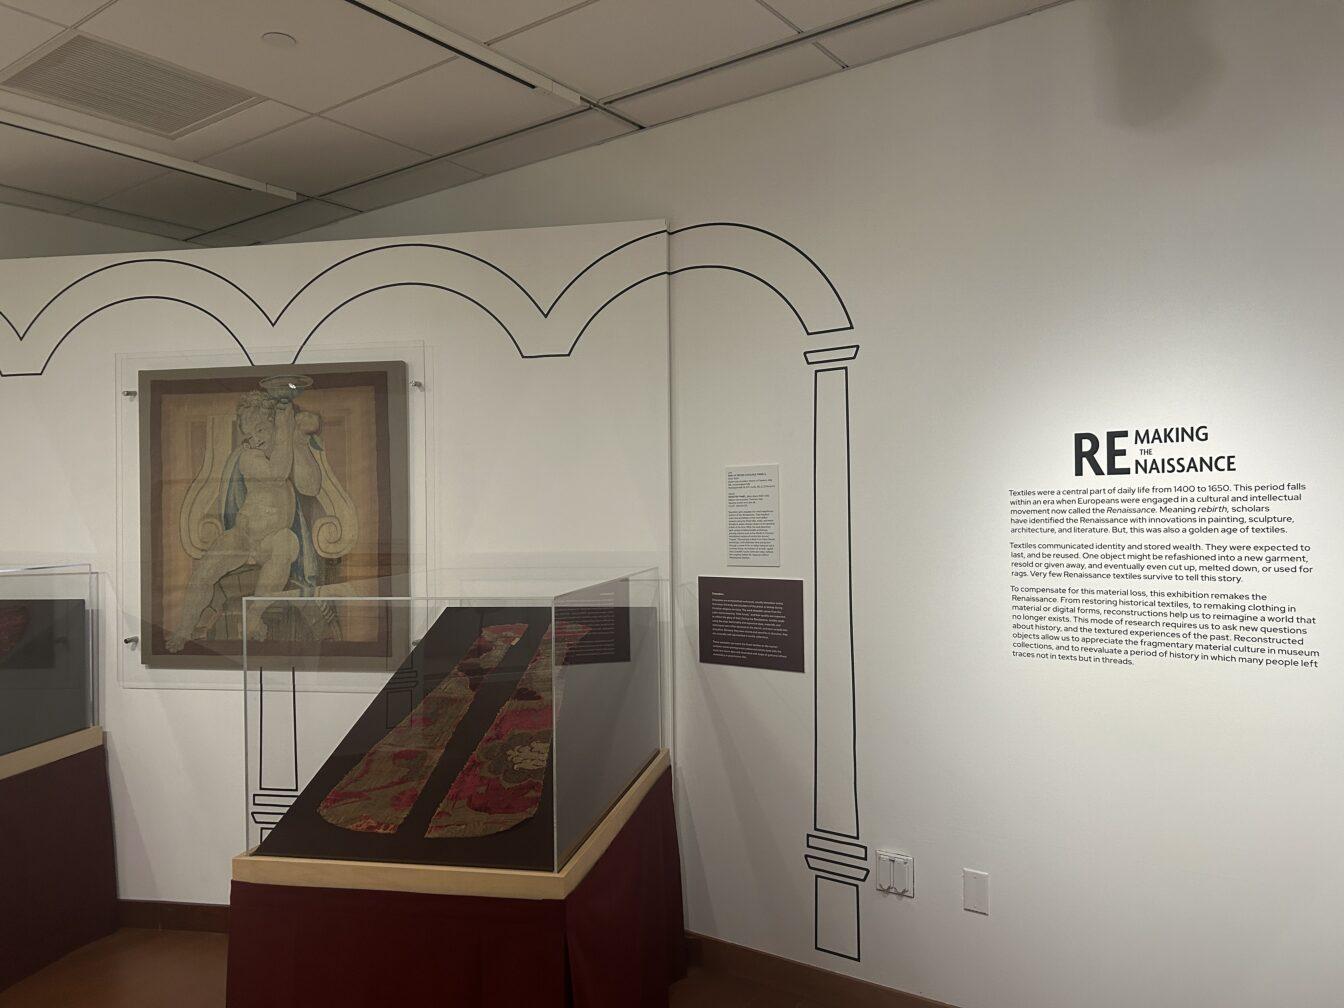 Reimagining the Renaissance exhibit.